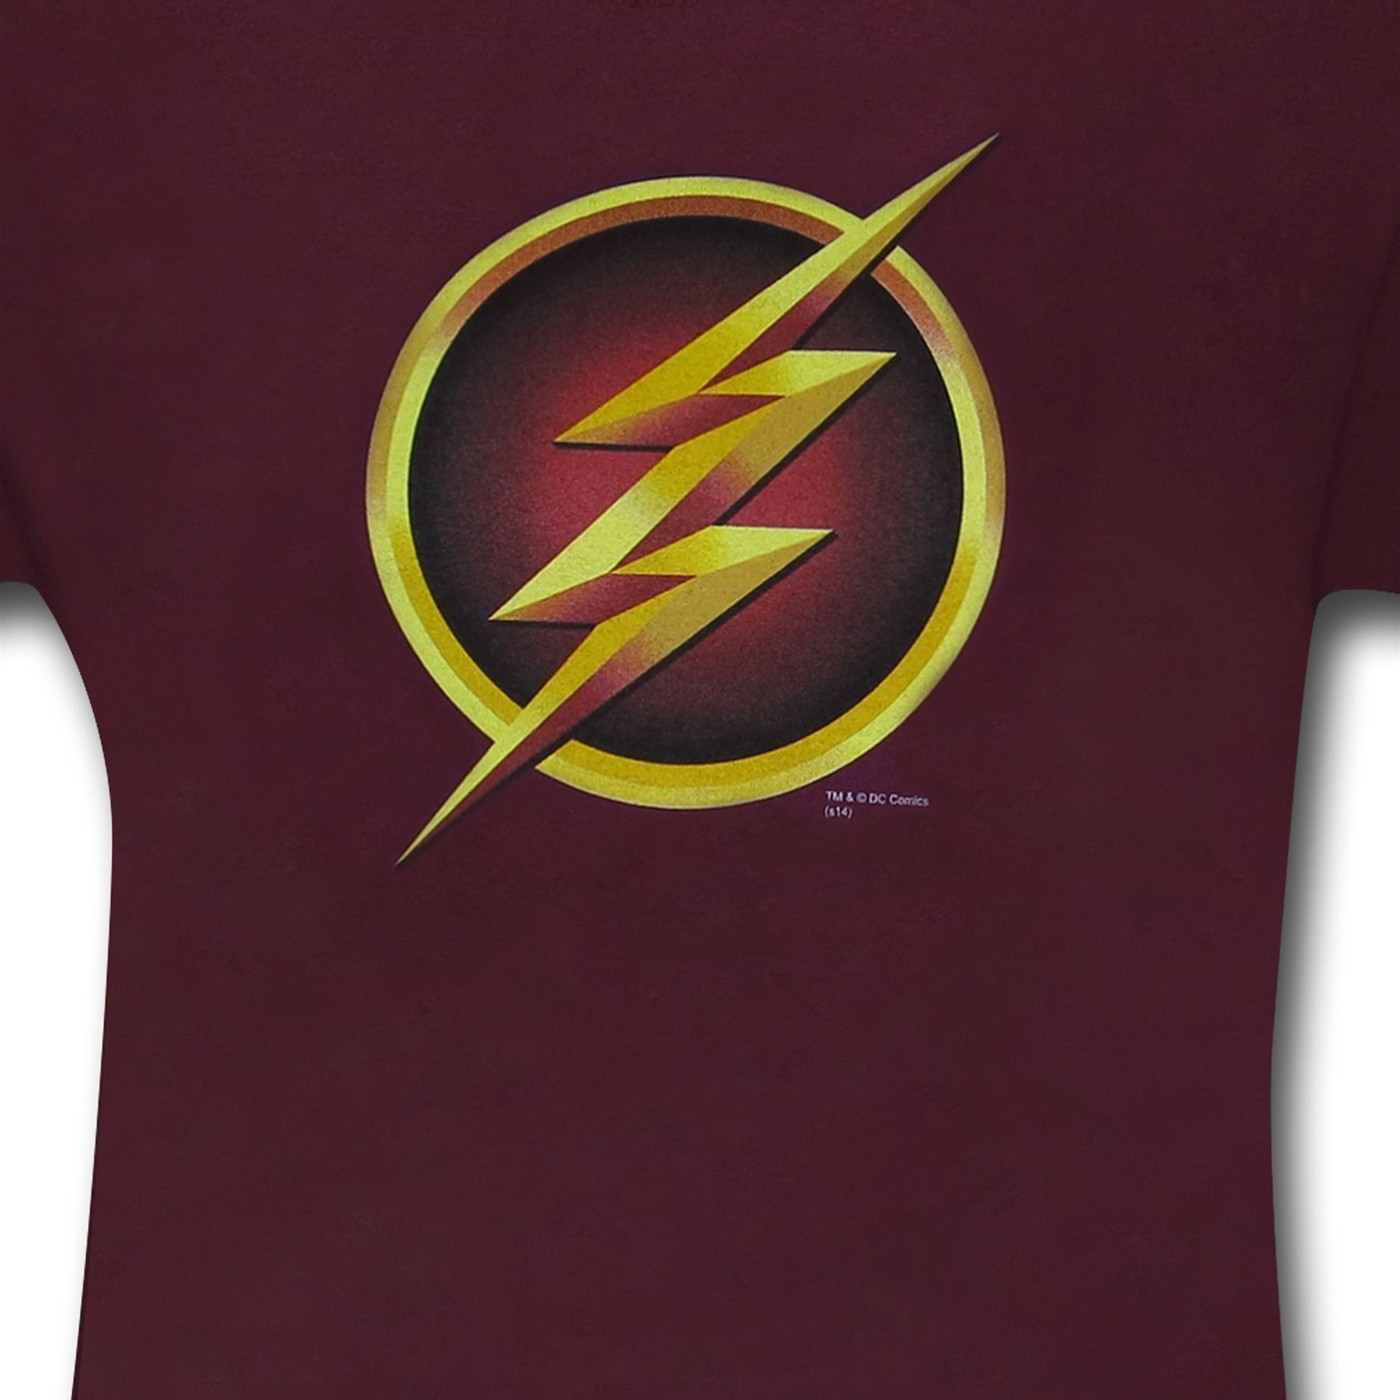 Flash TV Show Symbol T-Shirt